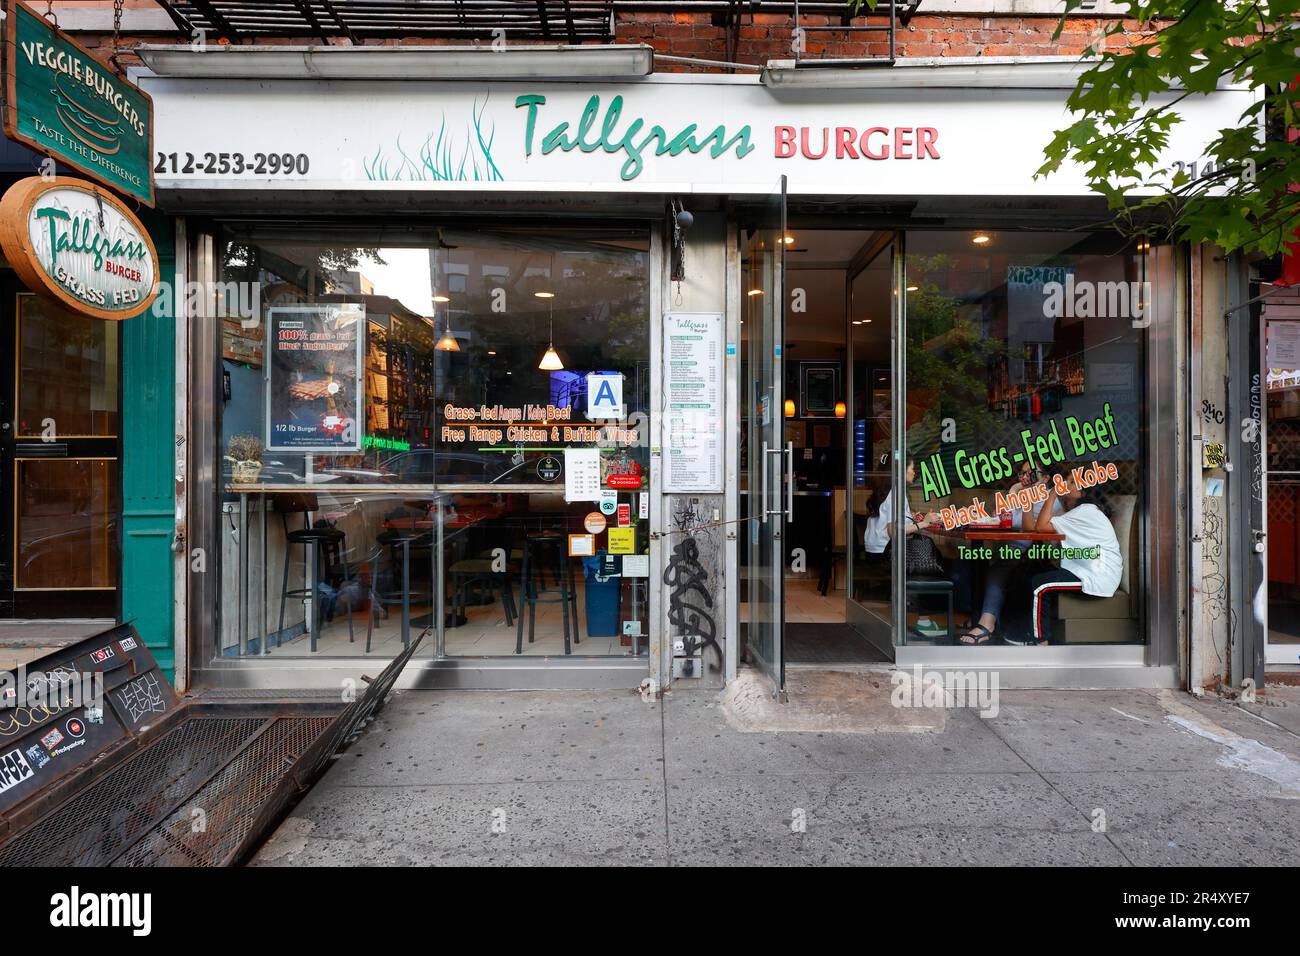 Tallgrass Burger, 214 1st Ave, New York, NYC storefront photo of a halal burger restaurant in Manhattan's East Village neighborhood. Stock Photo